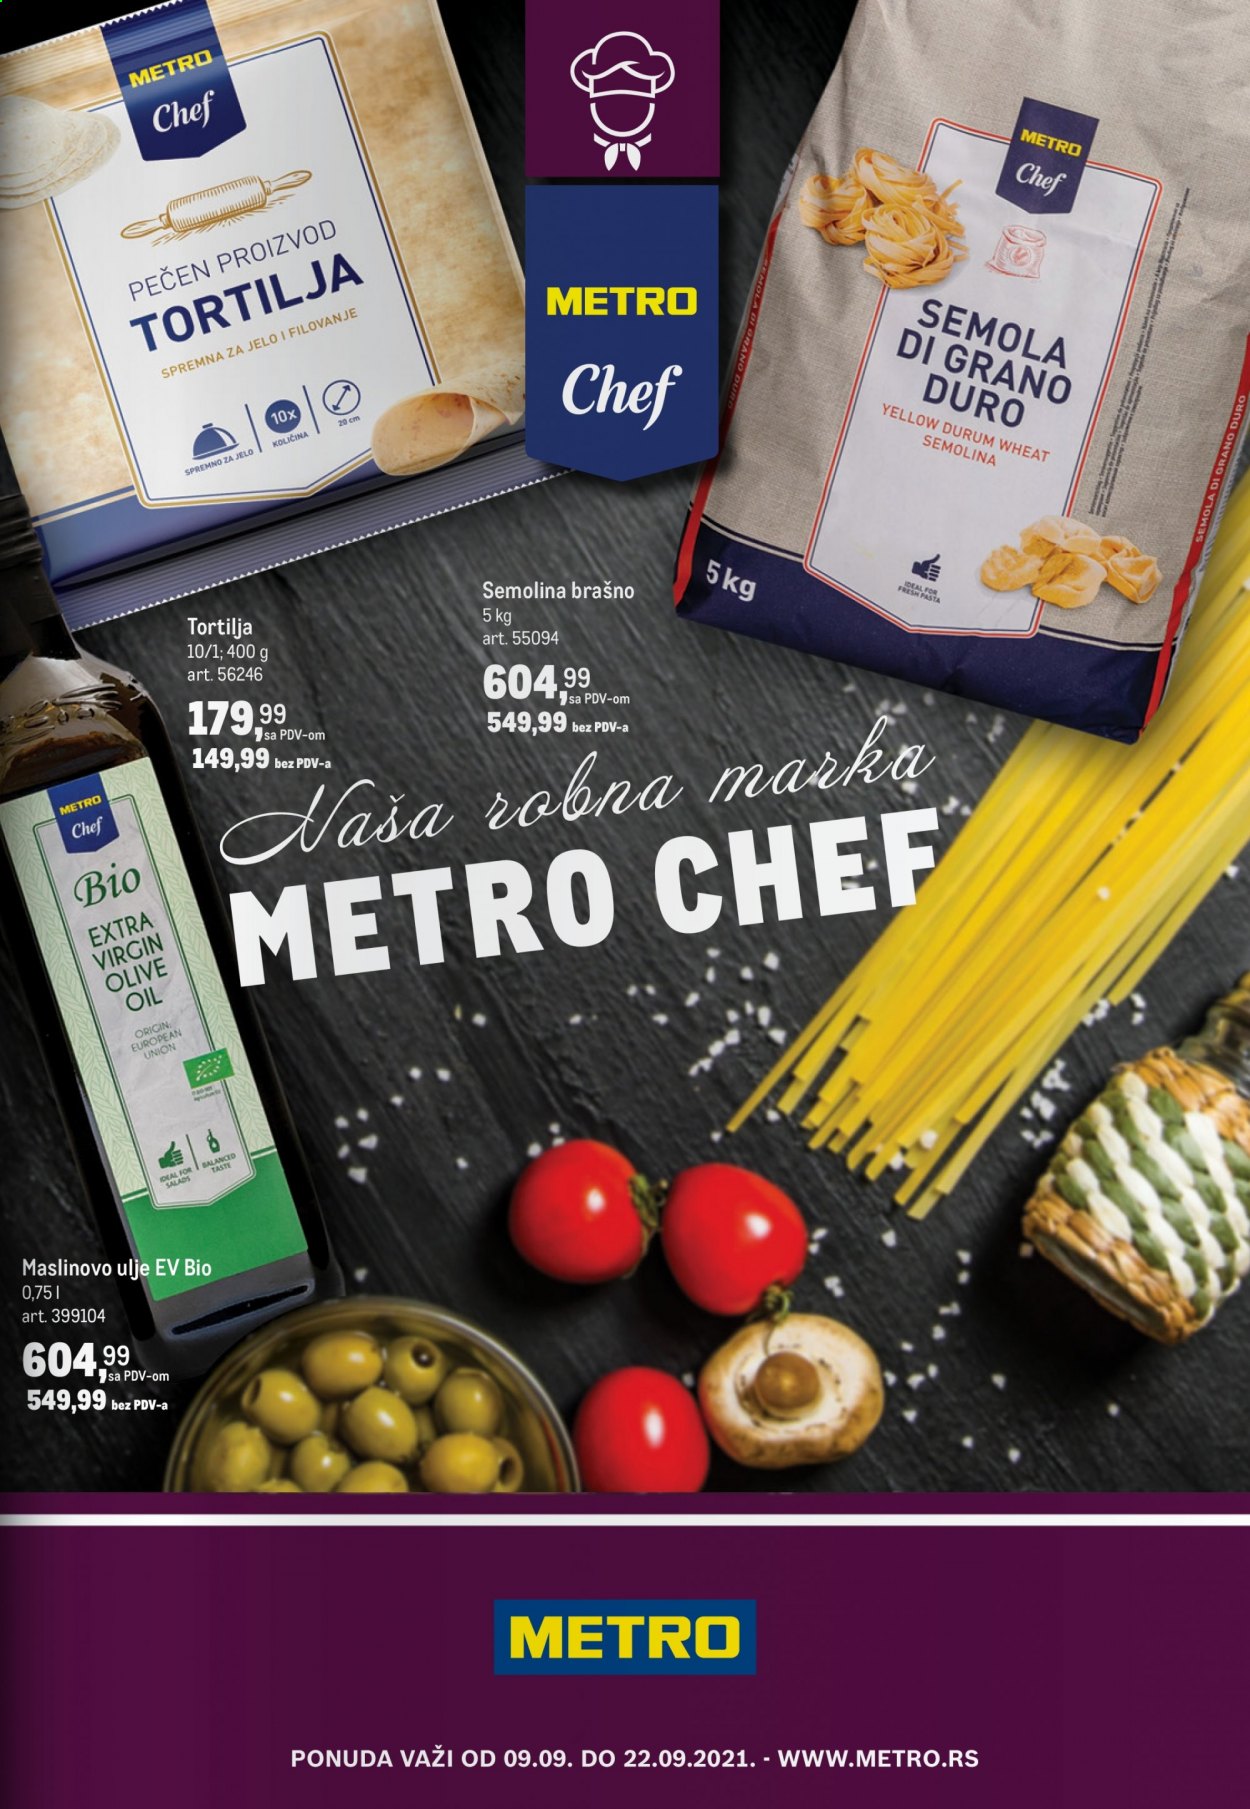 thumbnail - Metro katalog - 09.09.2021 - 22.09.2021 - Proizvodi na akciji - Metro Chef, tortilja, Dürüm, brašno, pasta, maslinovo ulje, ulje. Stranica 1.